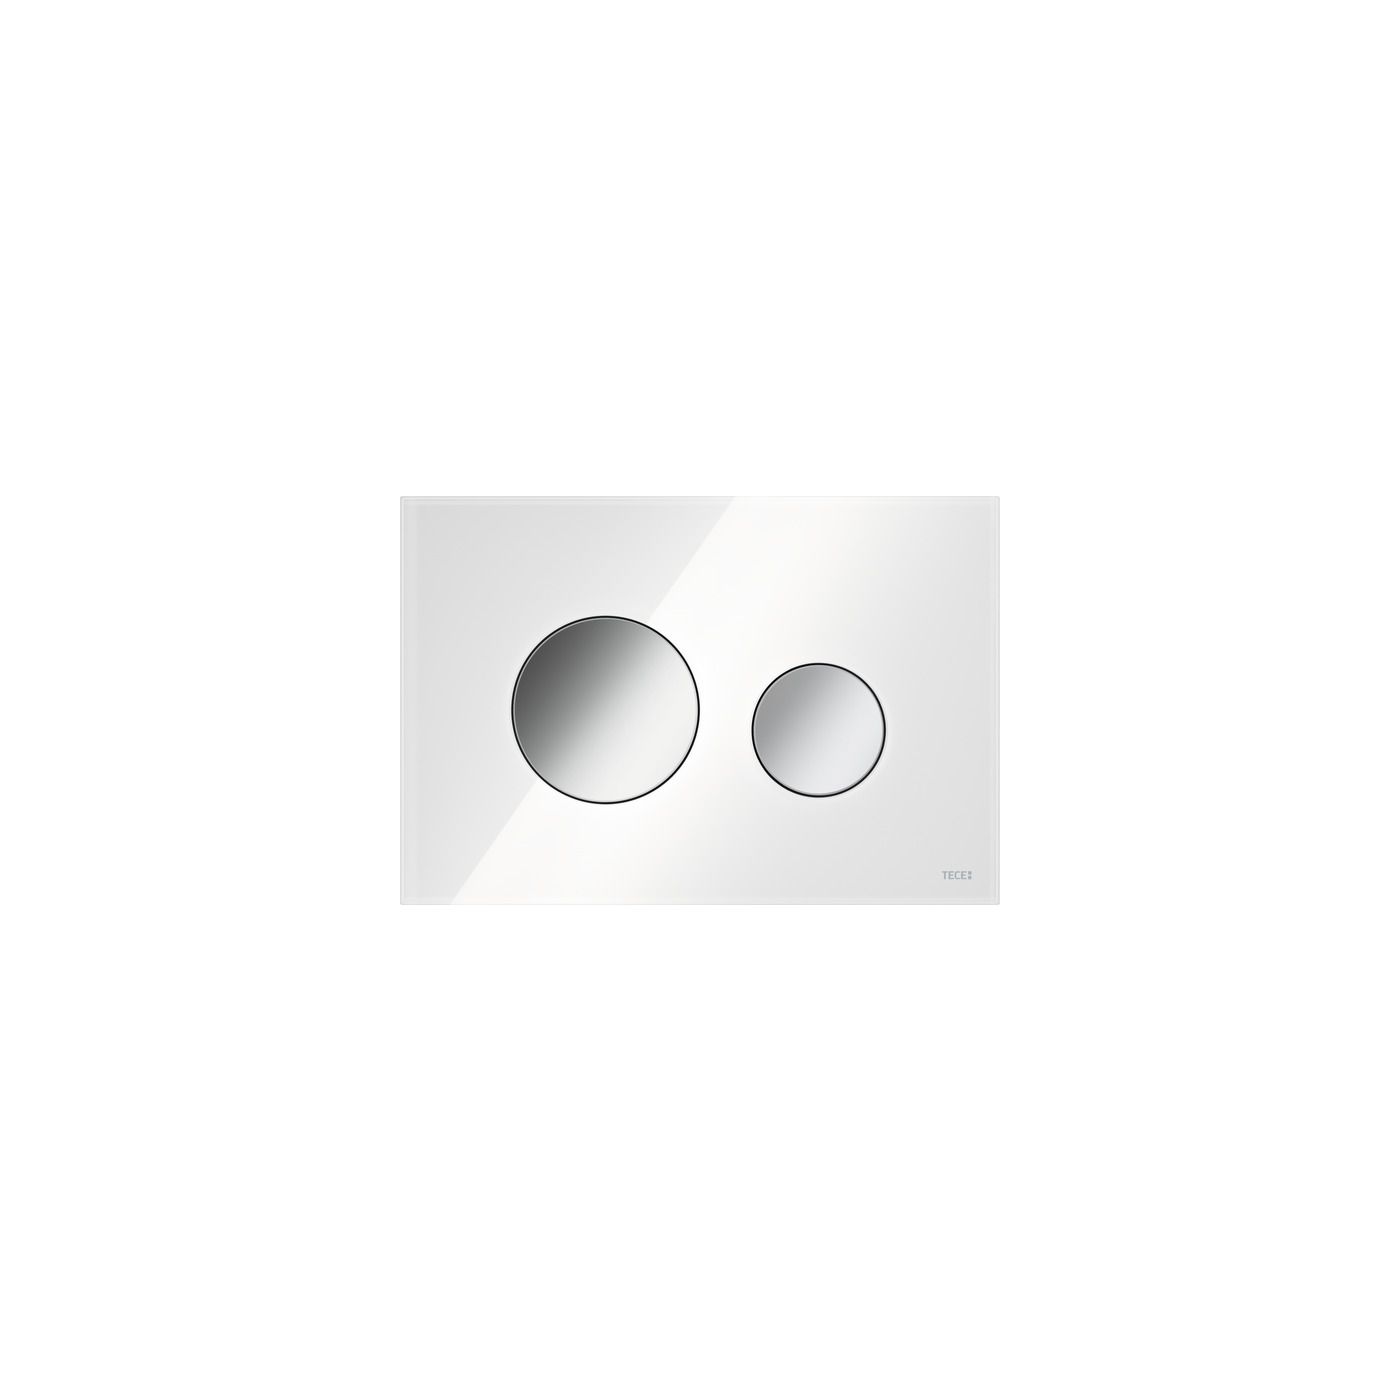 TECEloop toiletbedieningspaneel glas voor duospoeltechniek wit/glanzend chroom